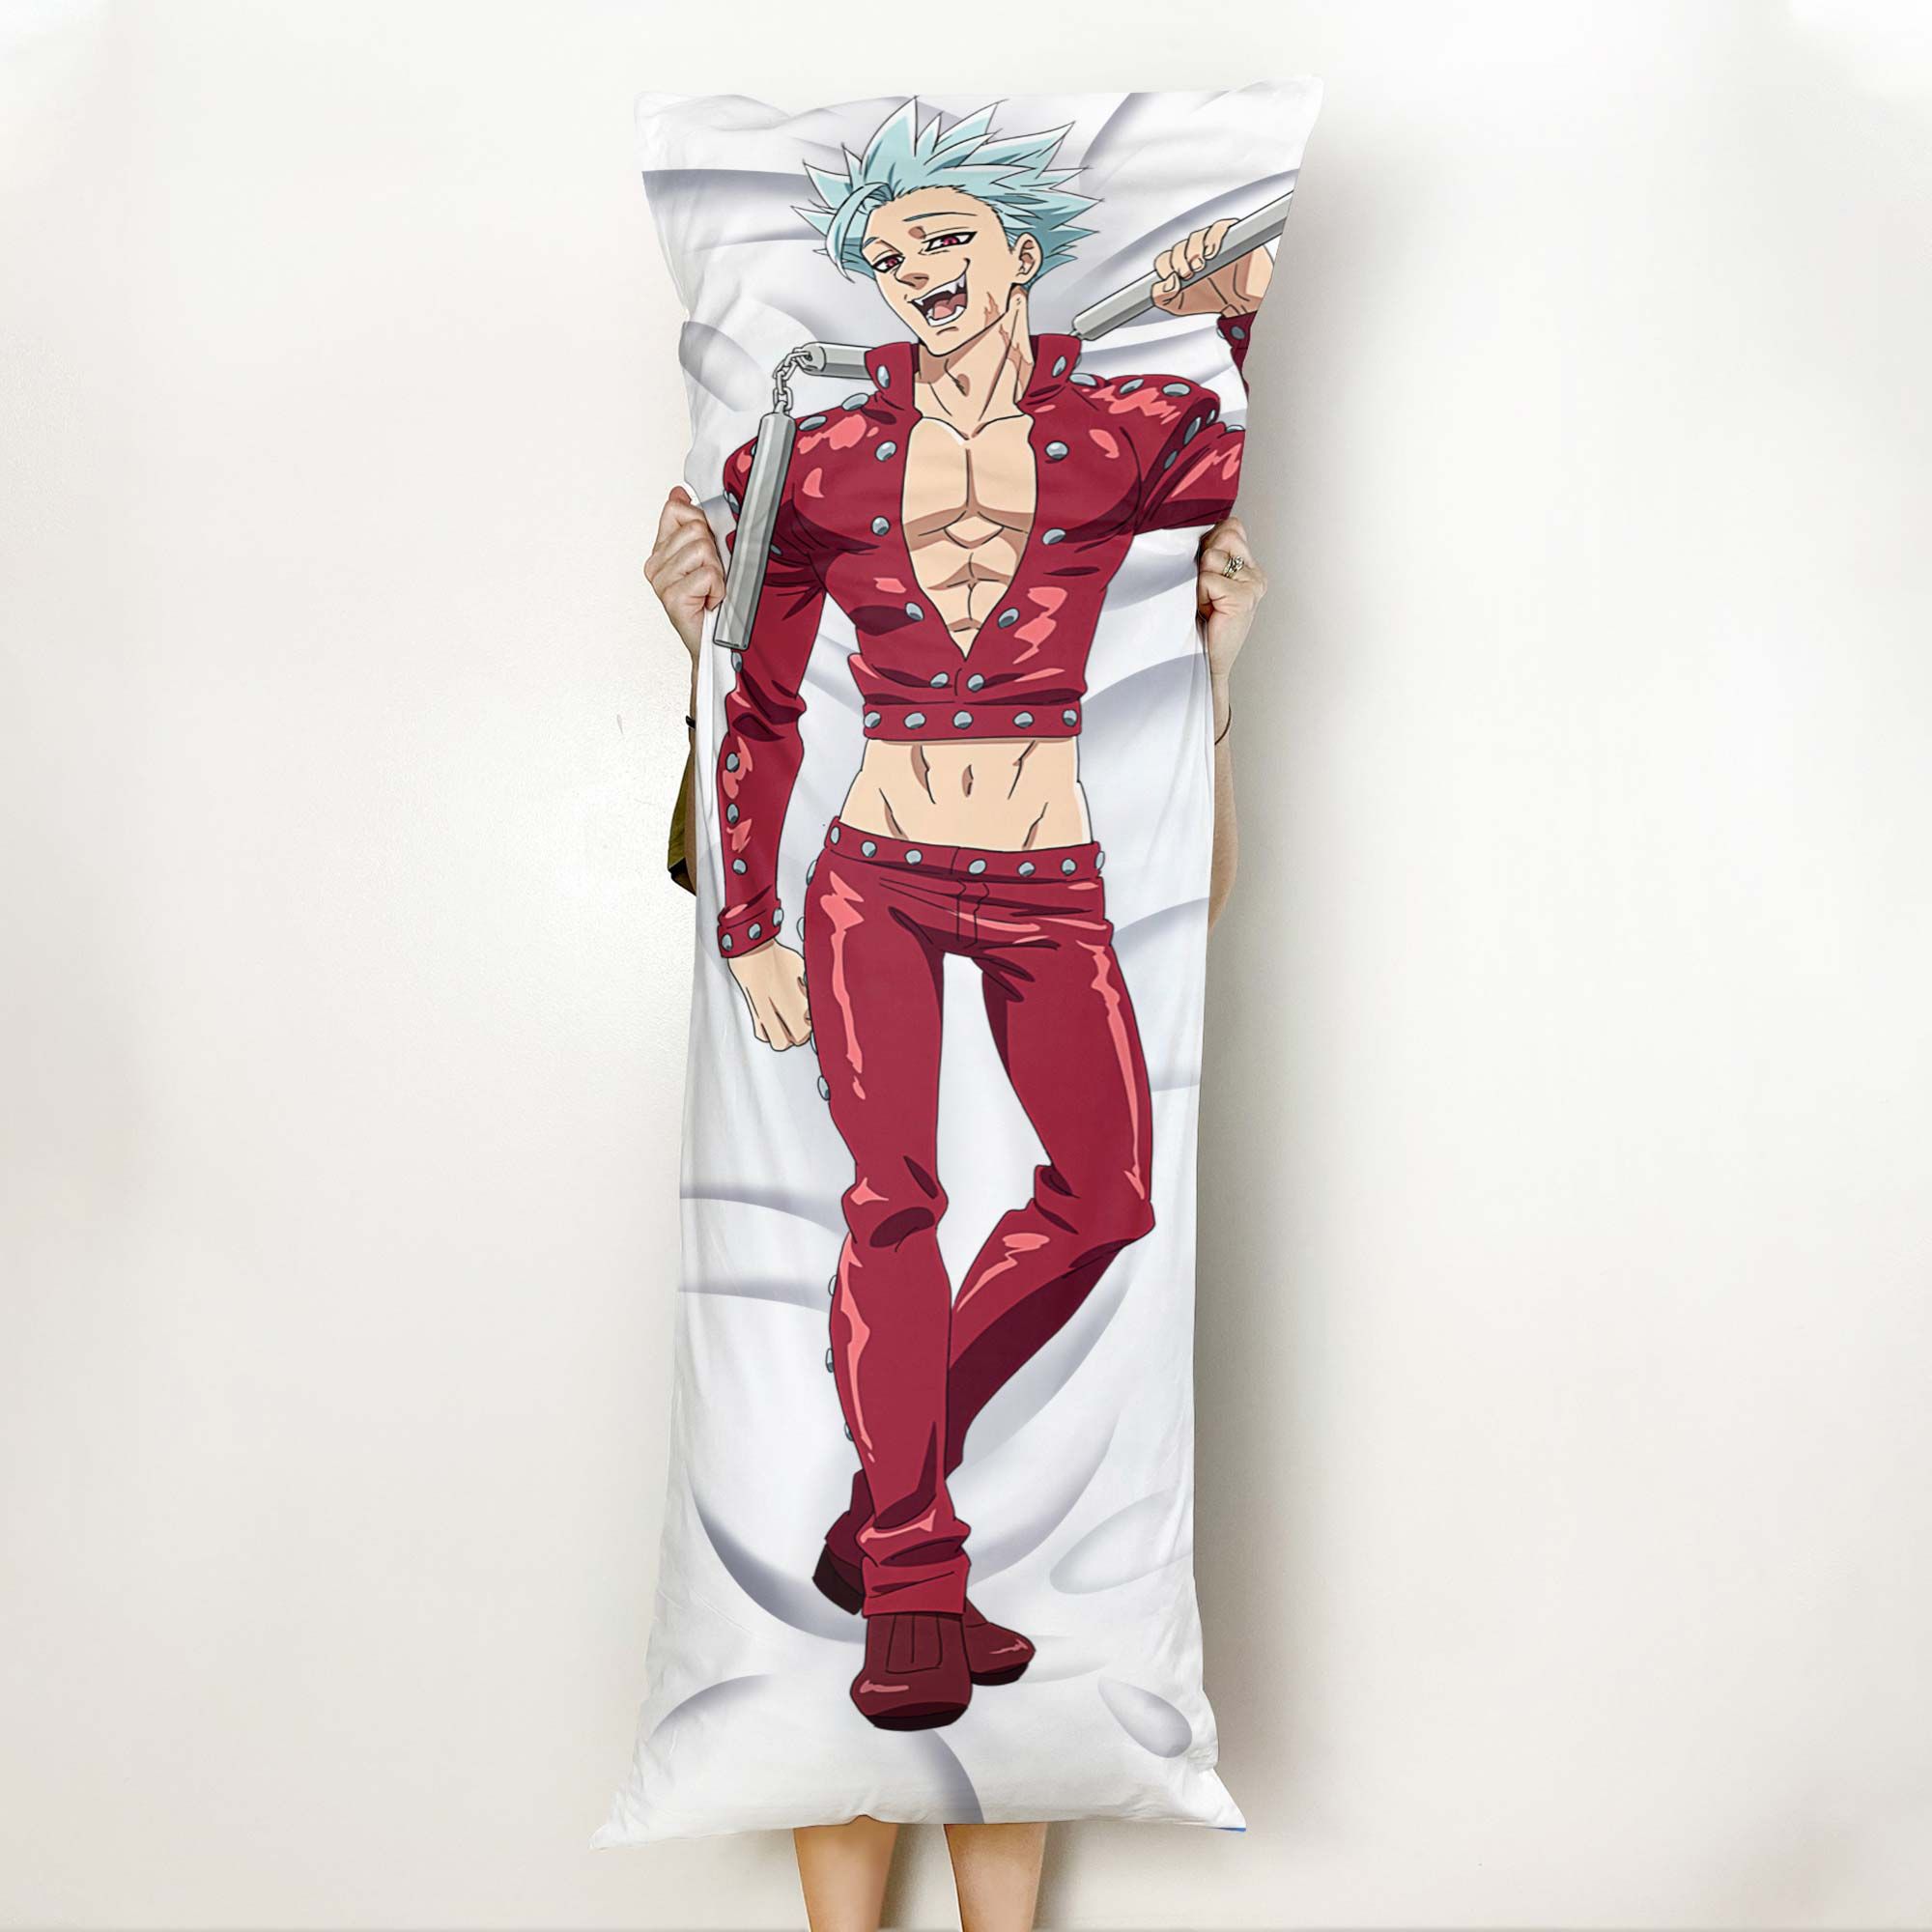 Ban Body Pillow Cover Custom The Seven Deadly Sins Anime Gifts Official Merch GO0110